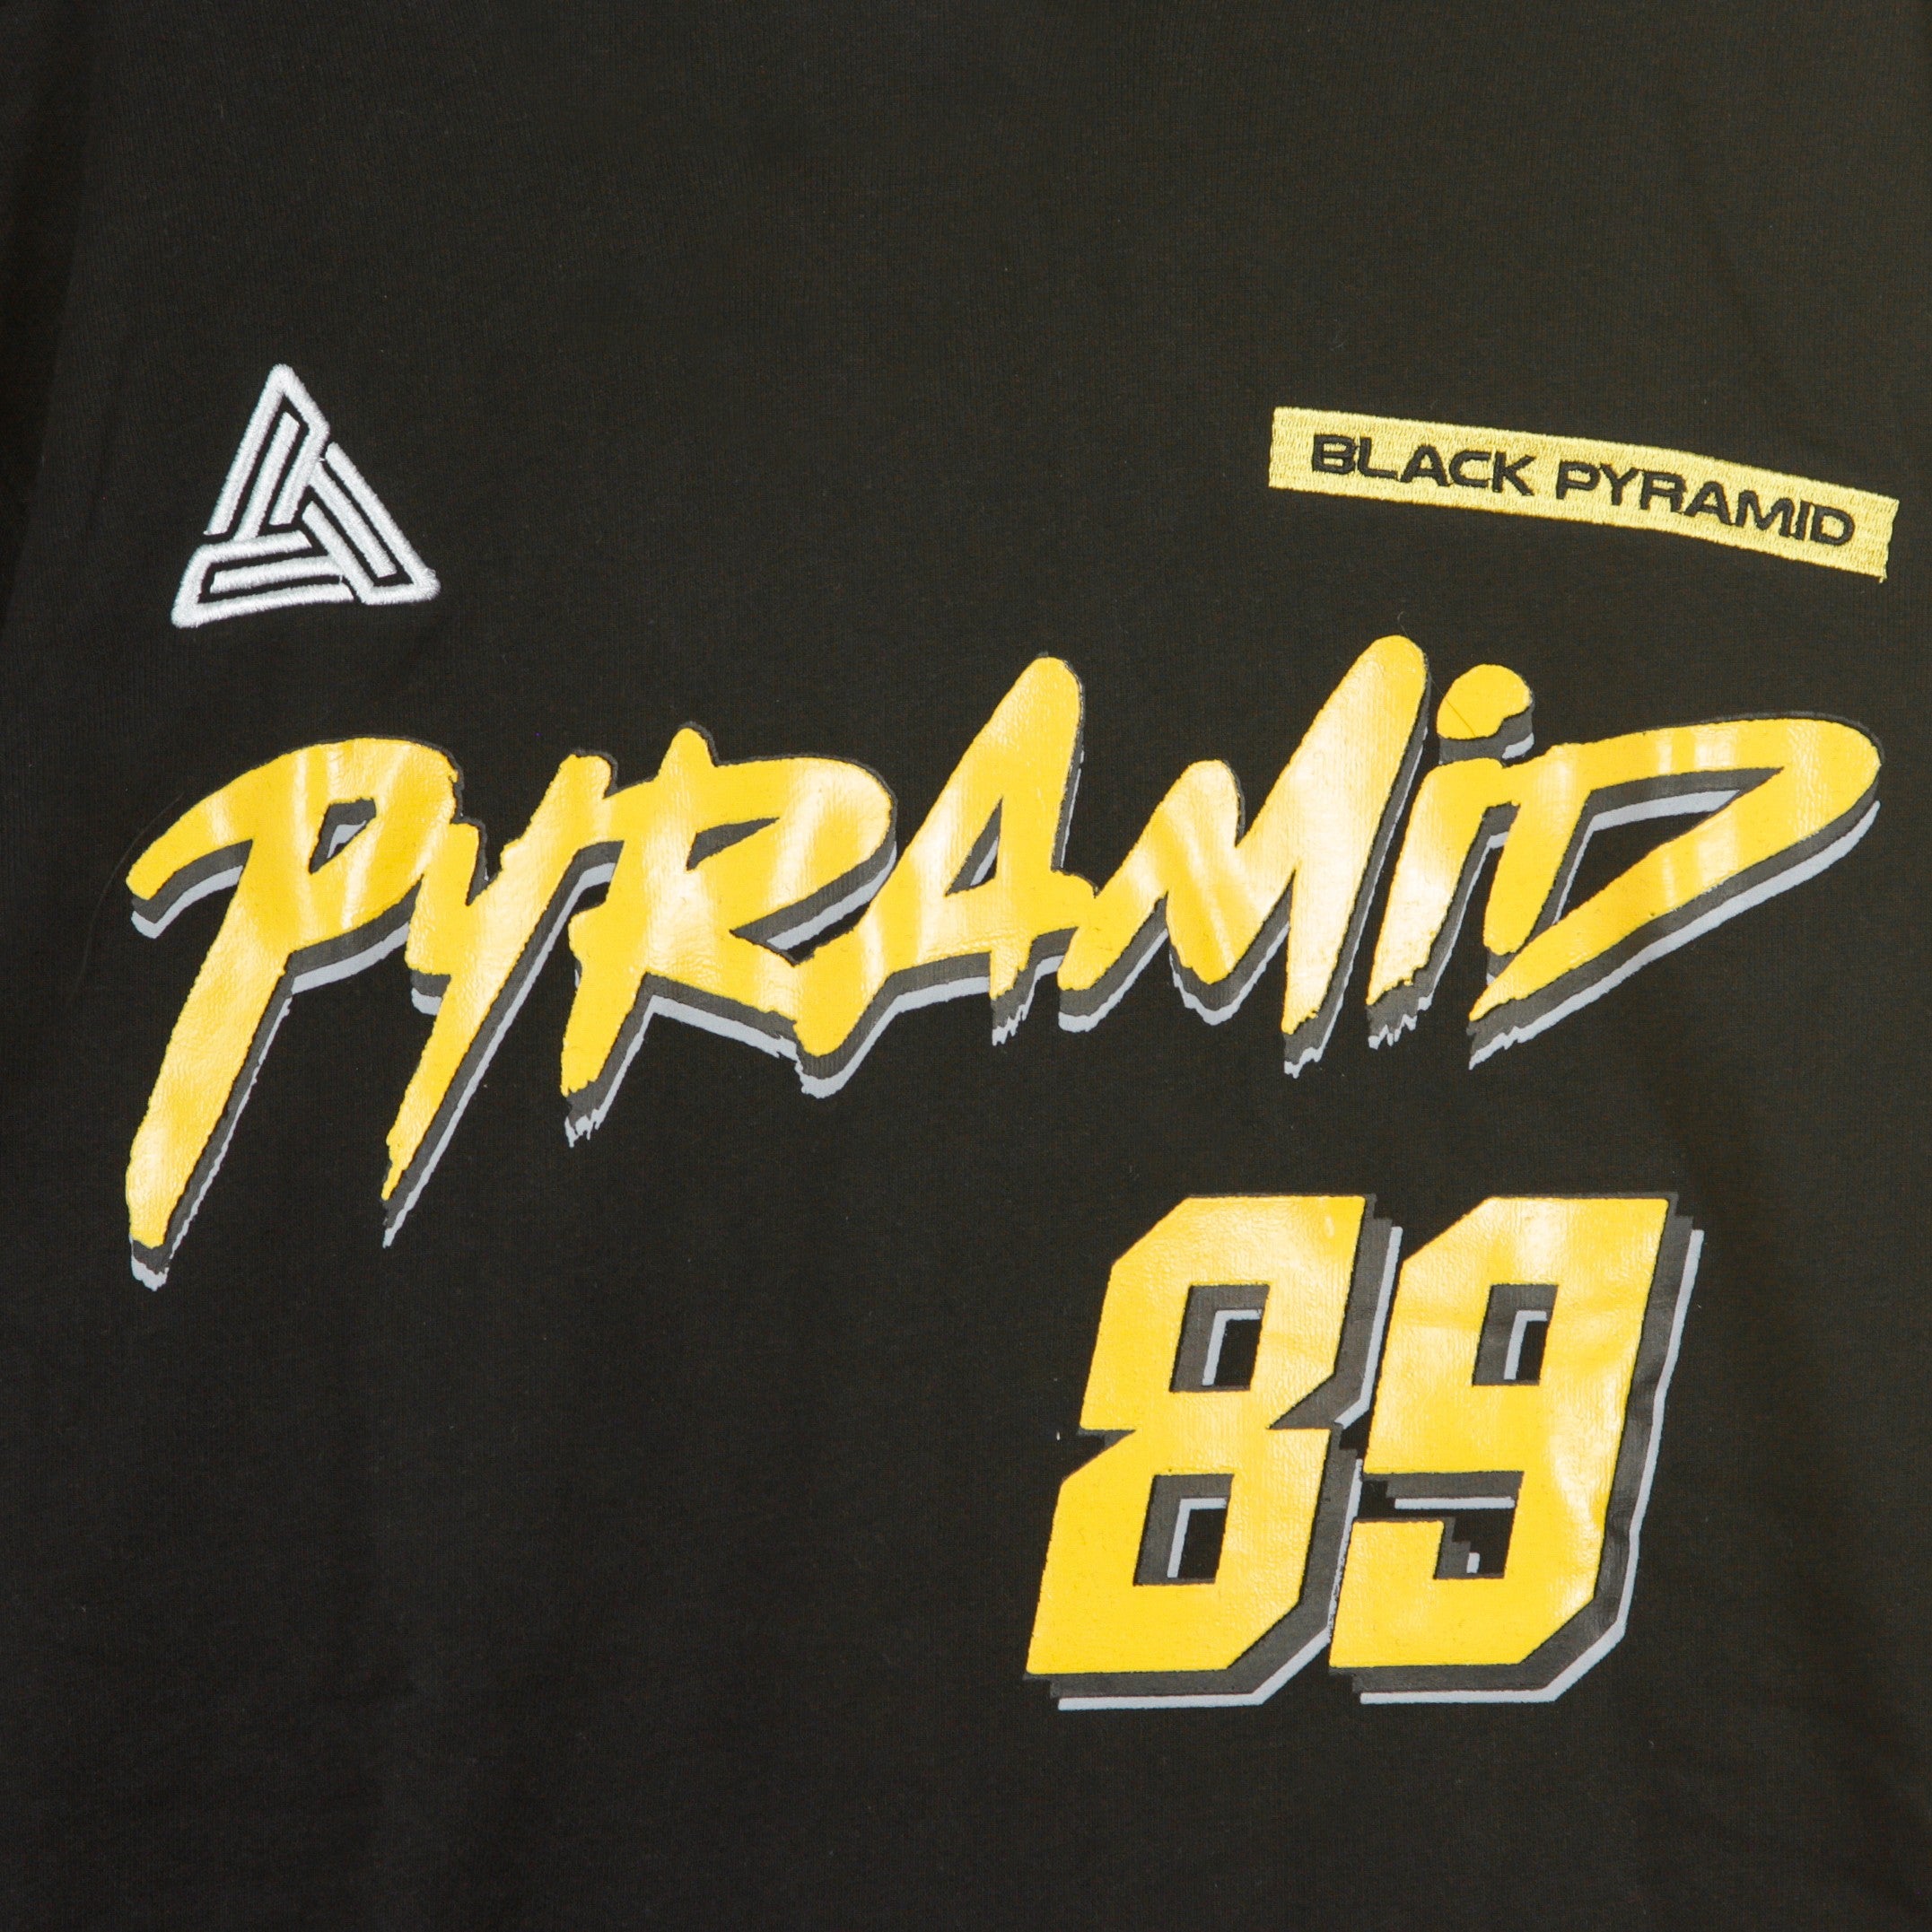 Pyramid 89 Black Men's Lightweight Hooded Sweatshirt